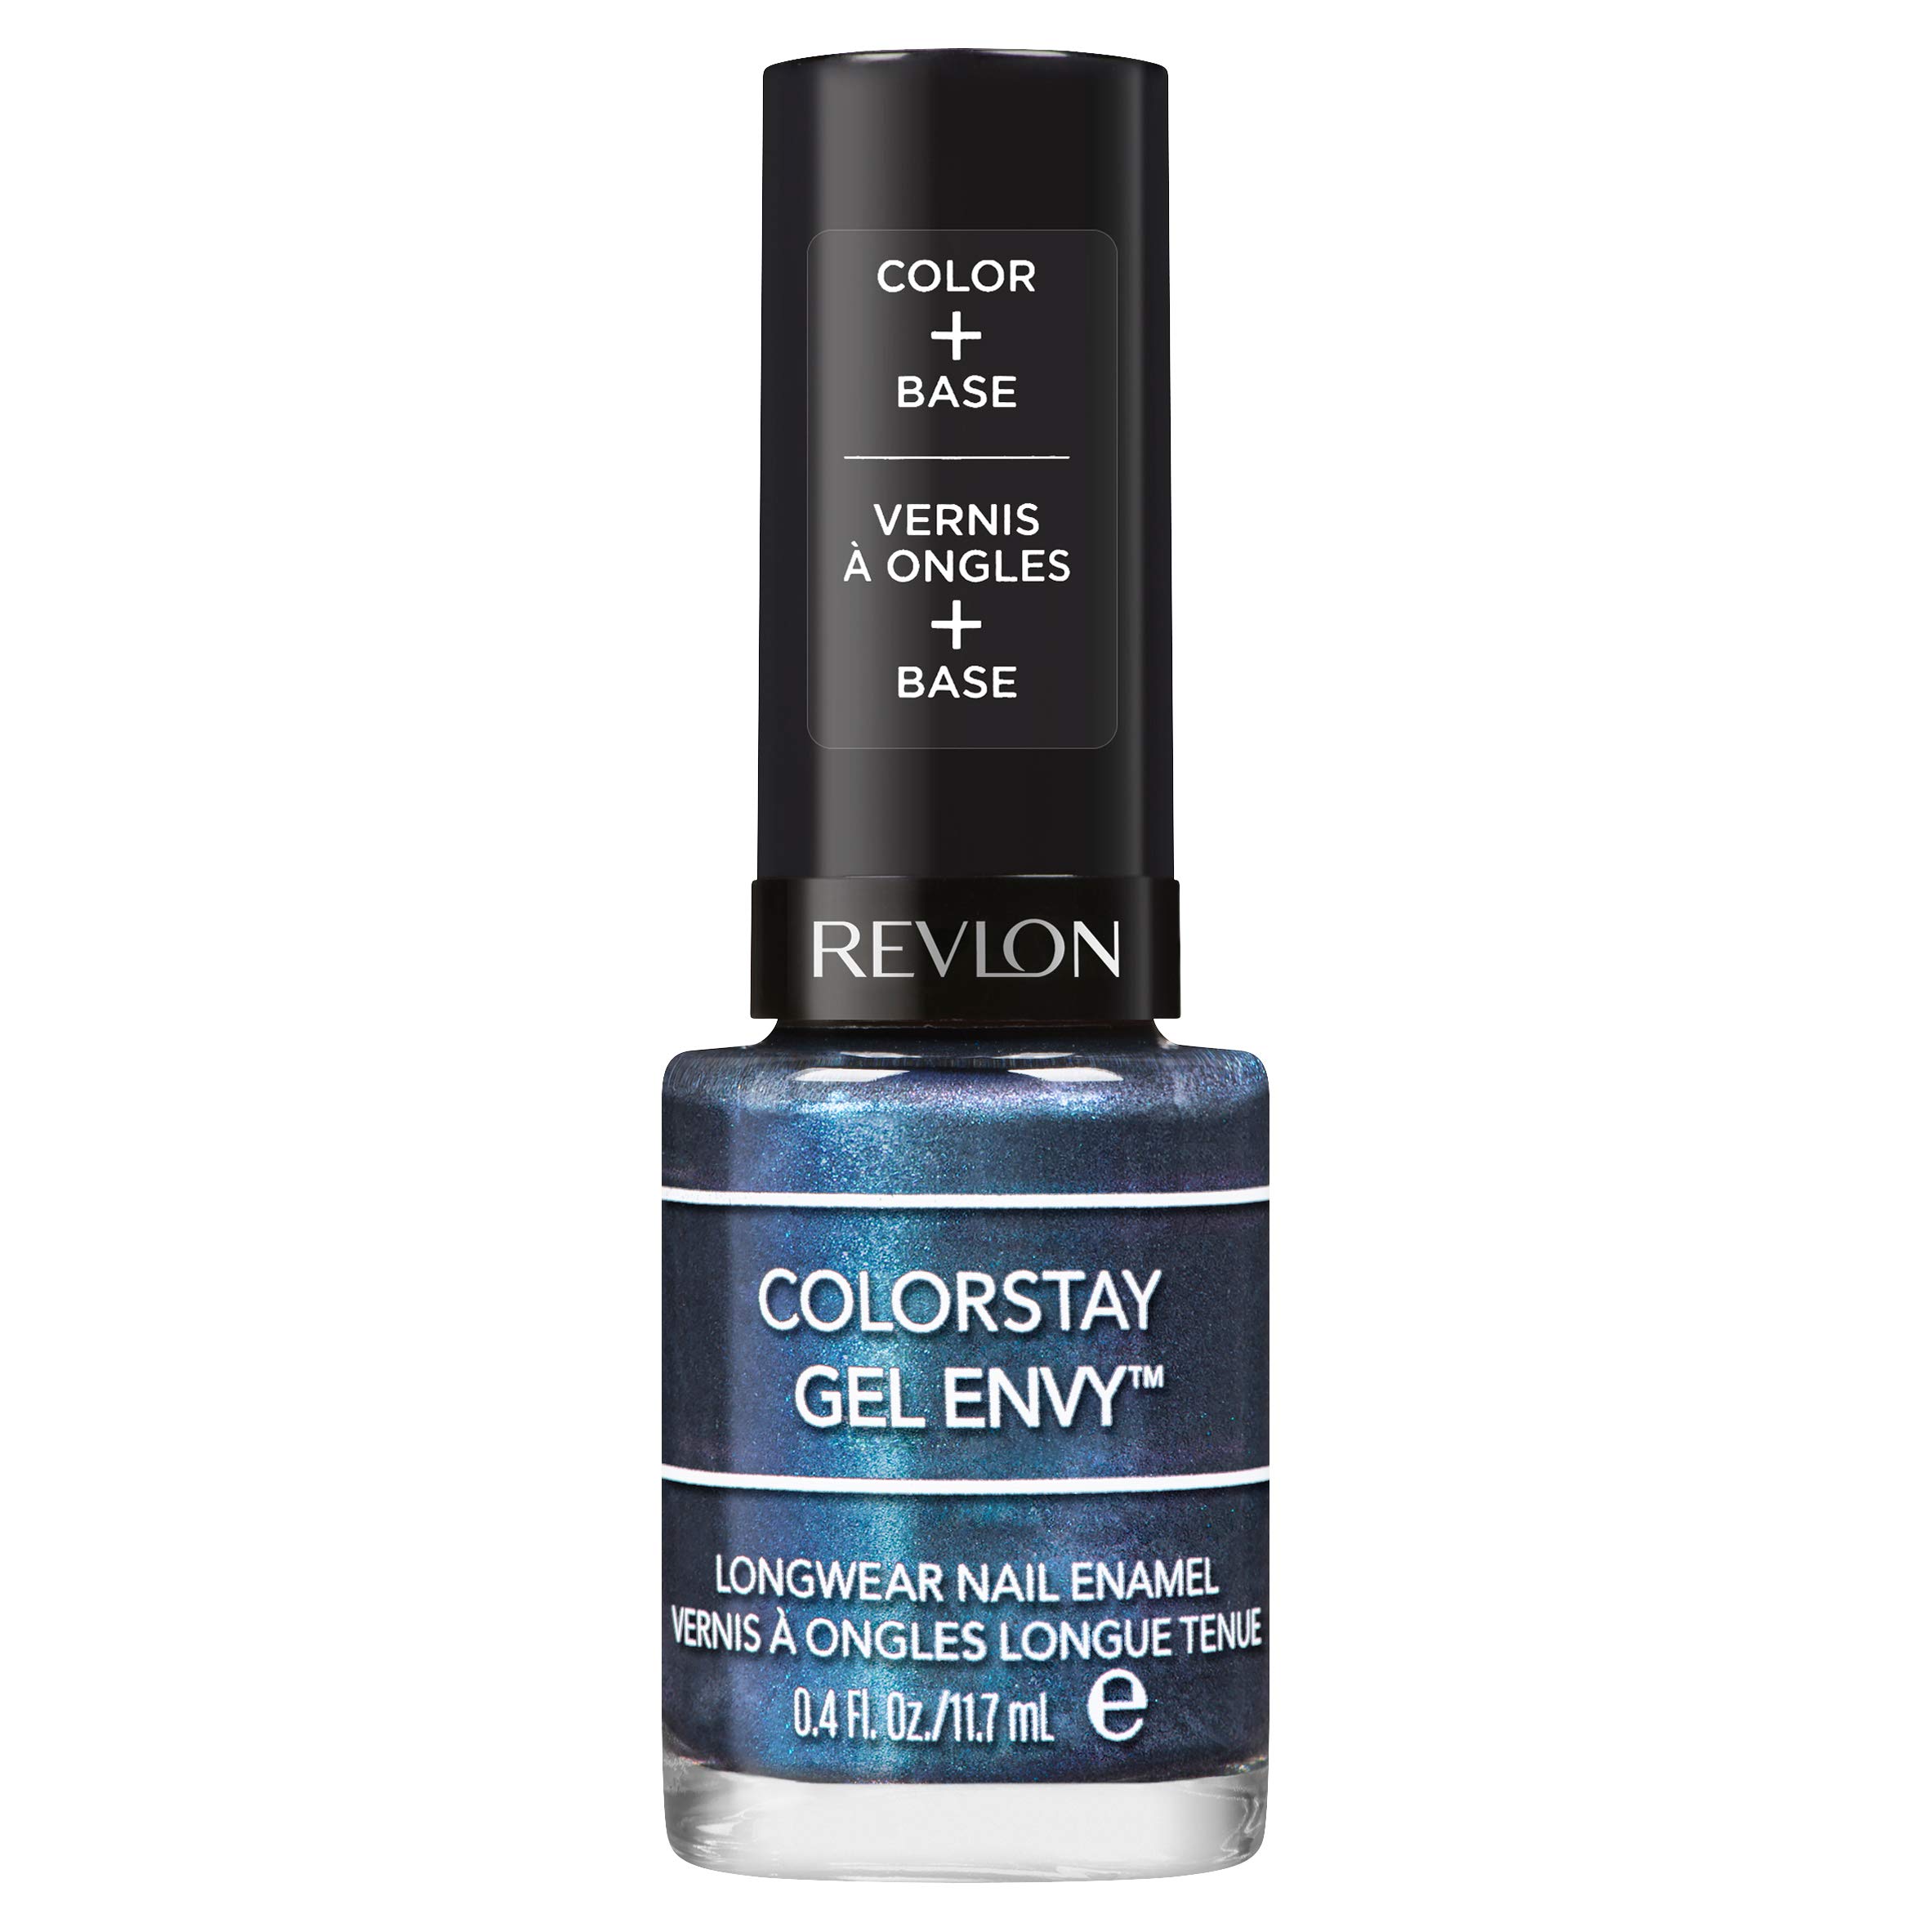 Revlon ColorStay Gel Envy Longwear Nail Polish, with Built-in Base Coat & Glossy Shine Finish, in Blue/Green, 300 All In, 0.4 oz